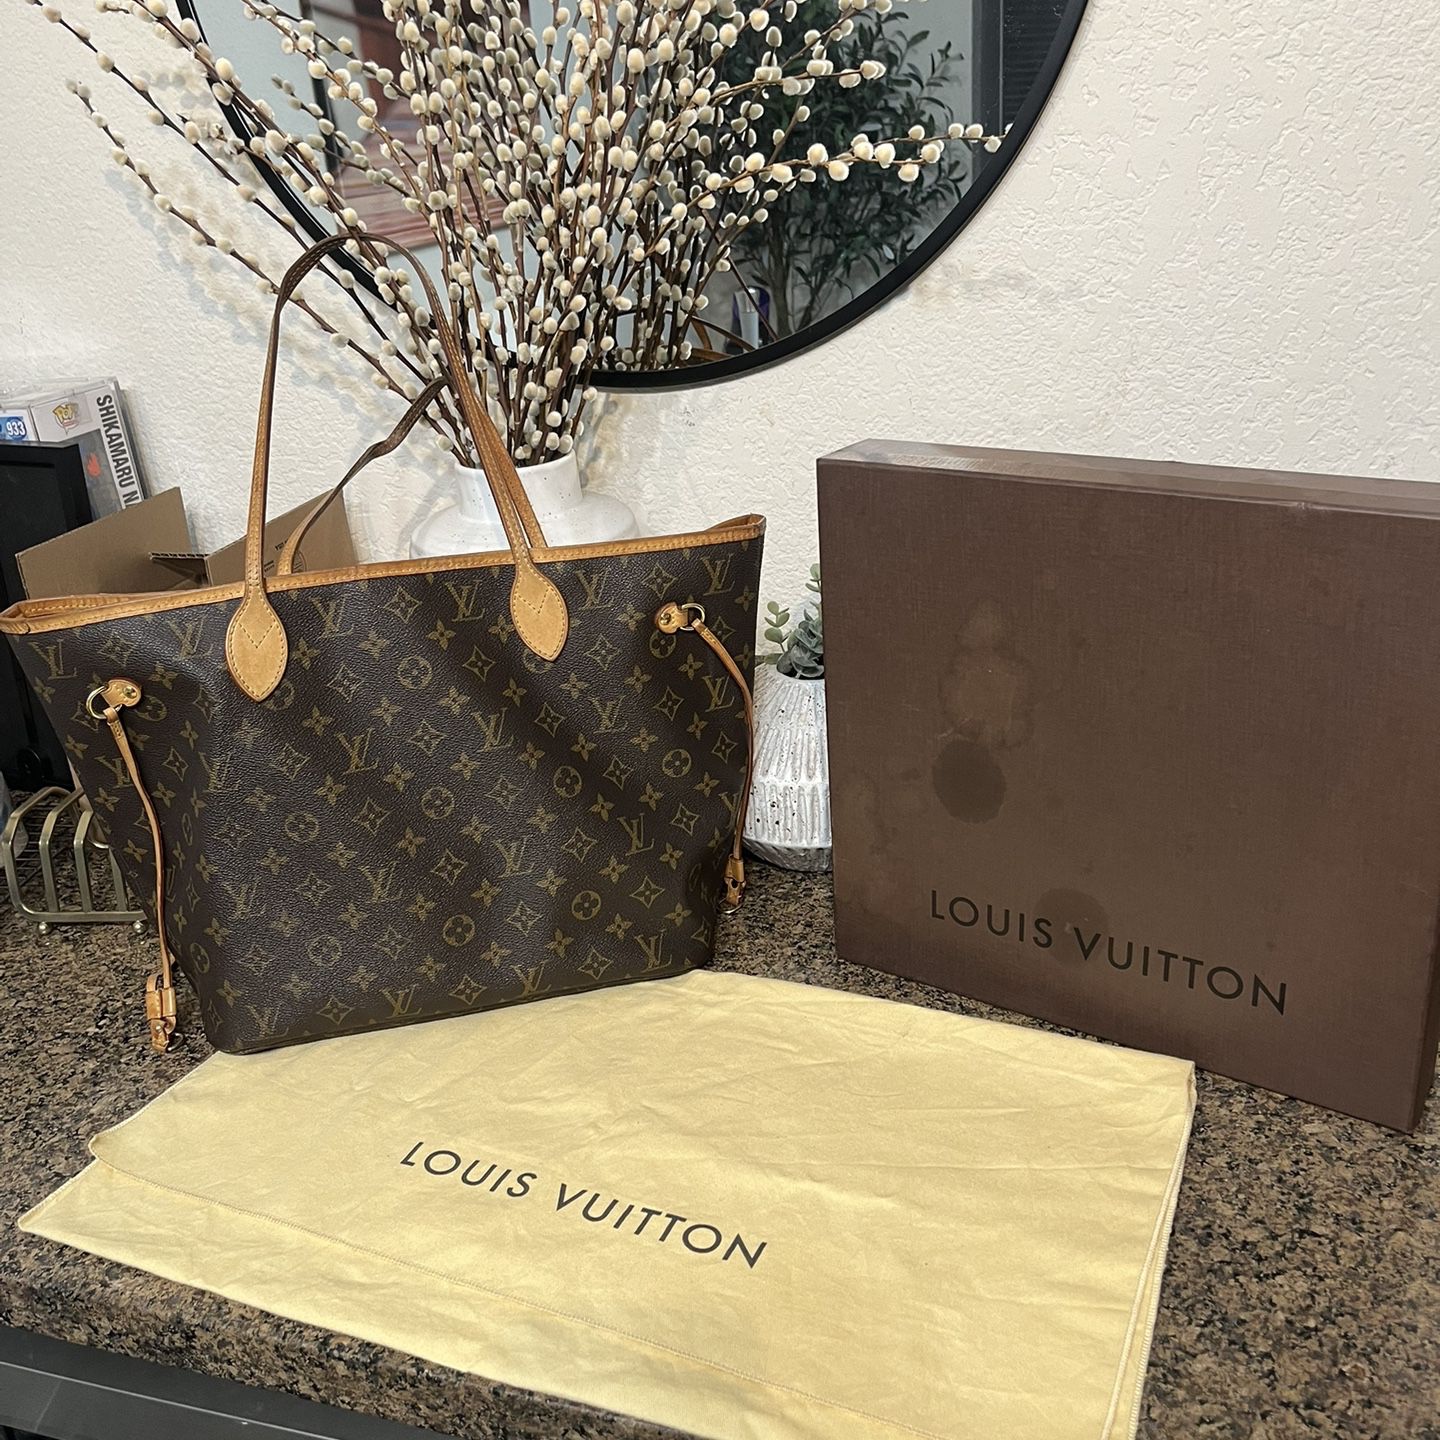 Louis Vuitton for Sale in Costa Mesa, CA - OfferUp